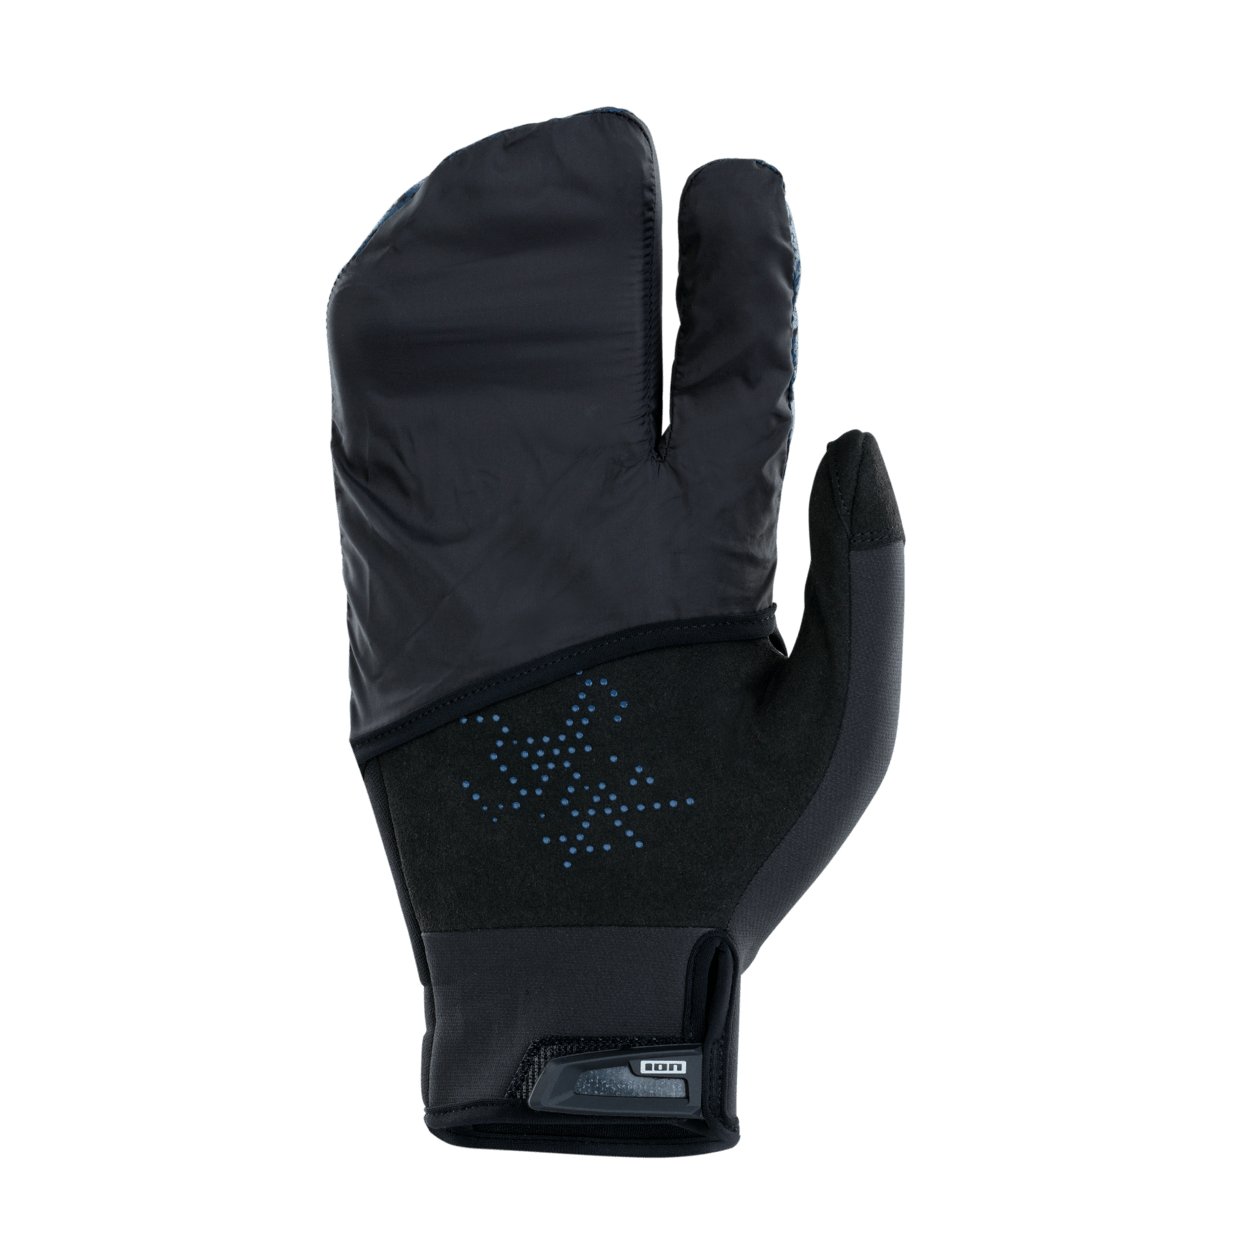 ION MTB Gloves Haze Amp 2022 - Worthing Watersports - 9008415909865 - Gloves - ION Bike